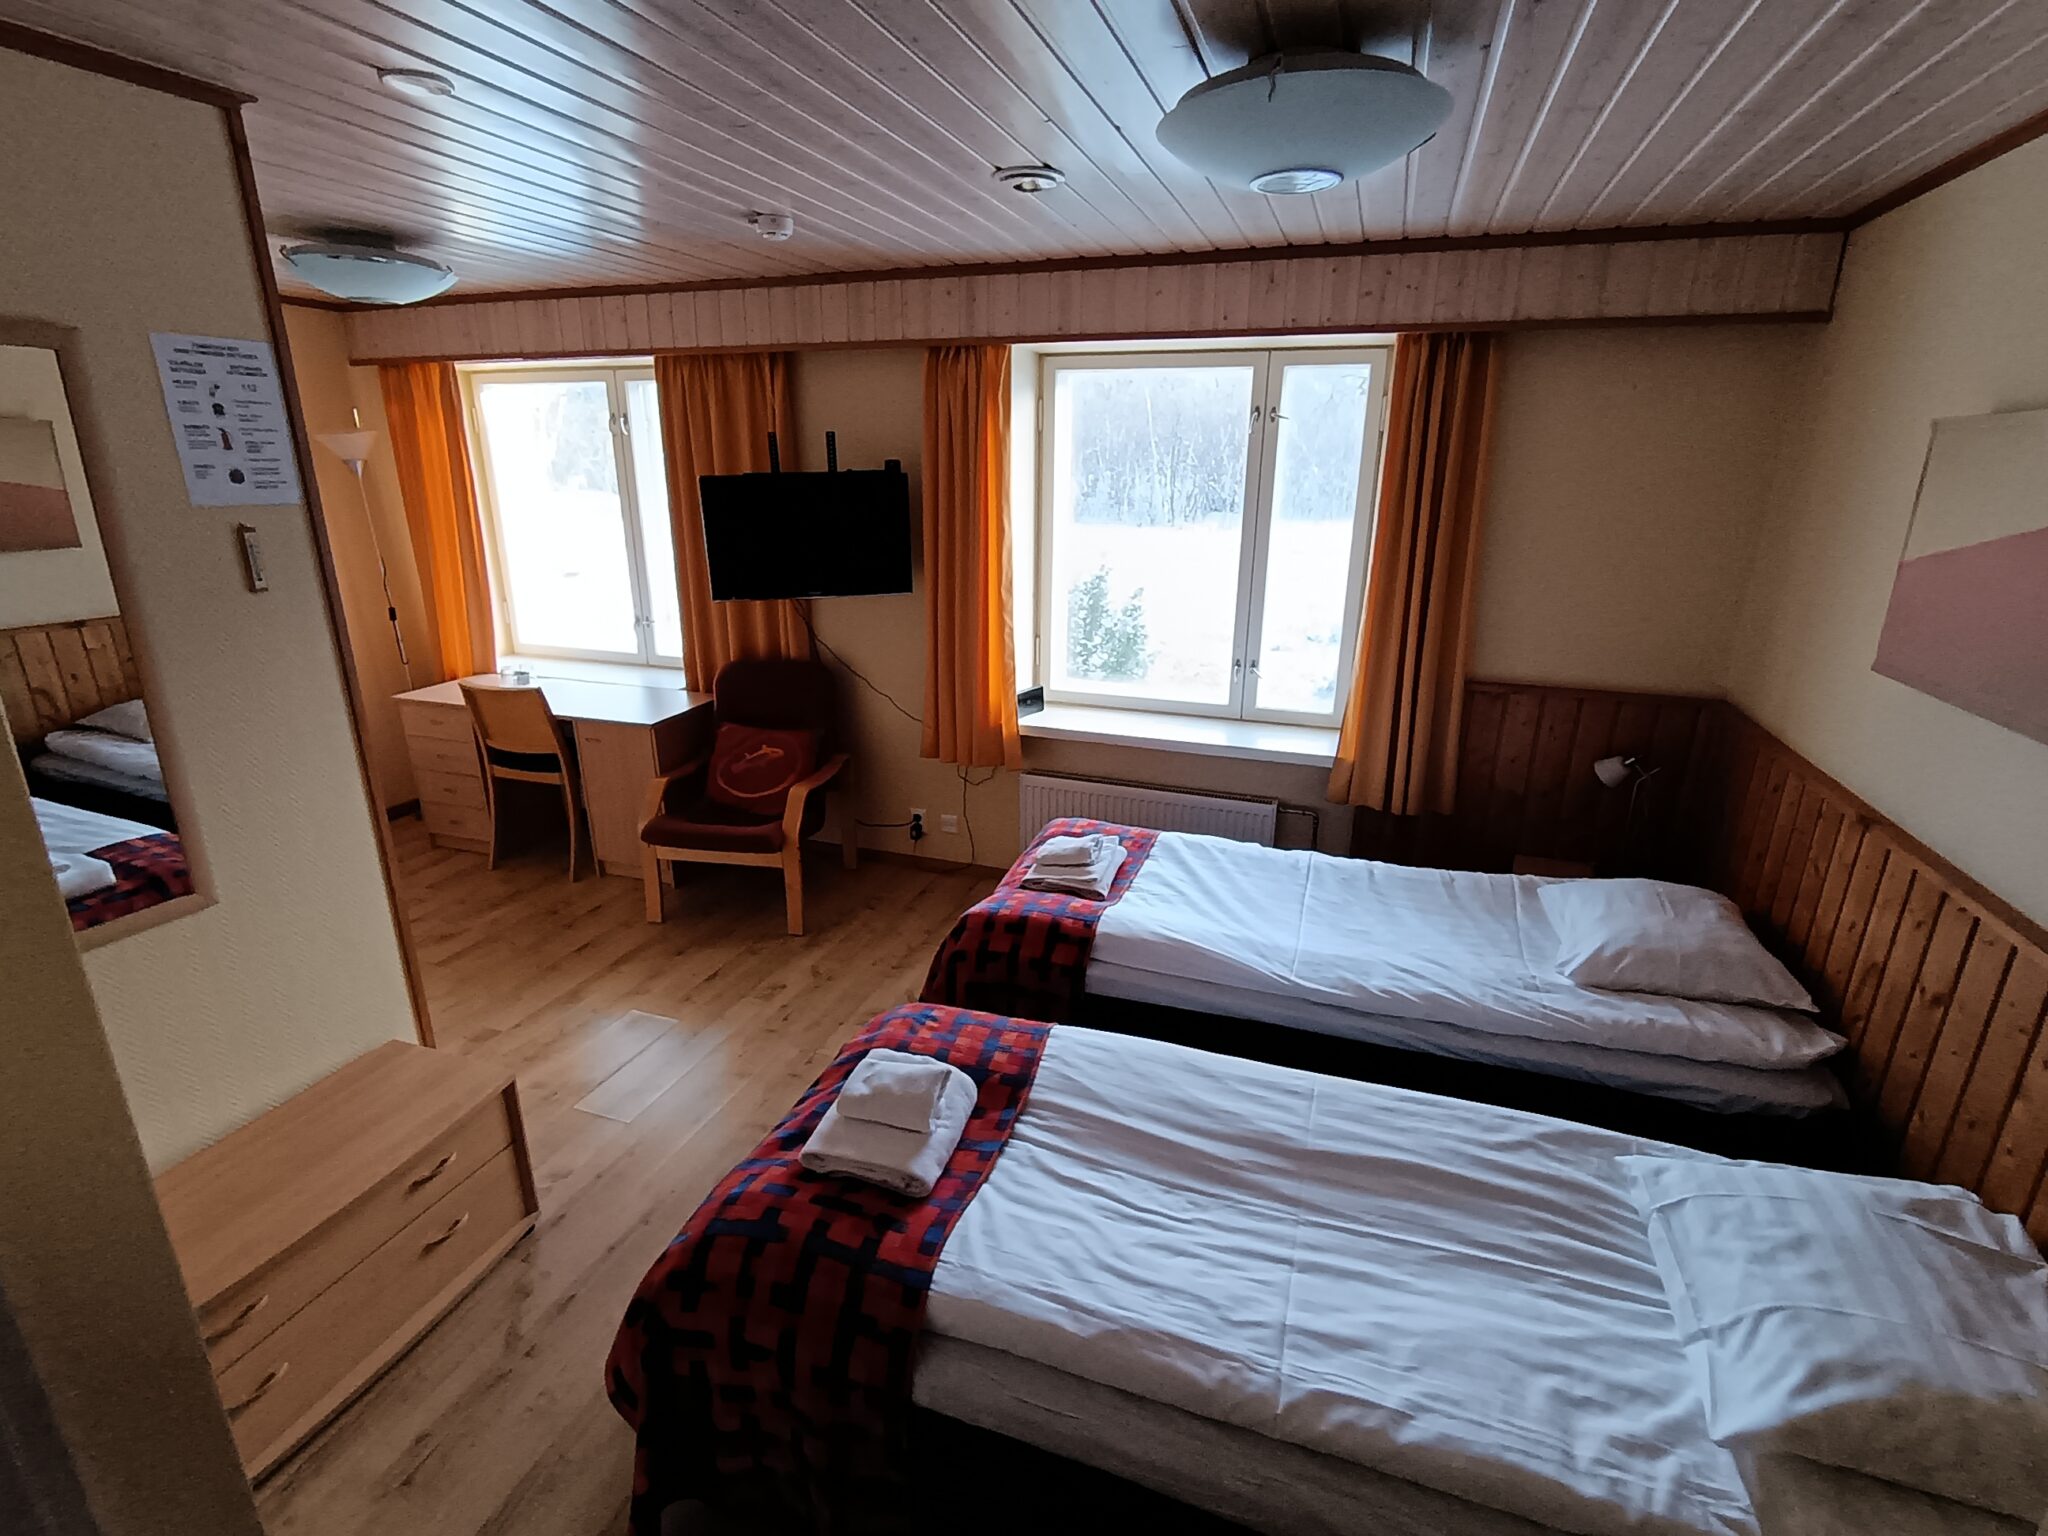 utsjoki hotel bedroom